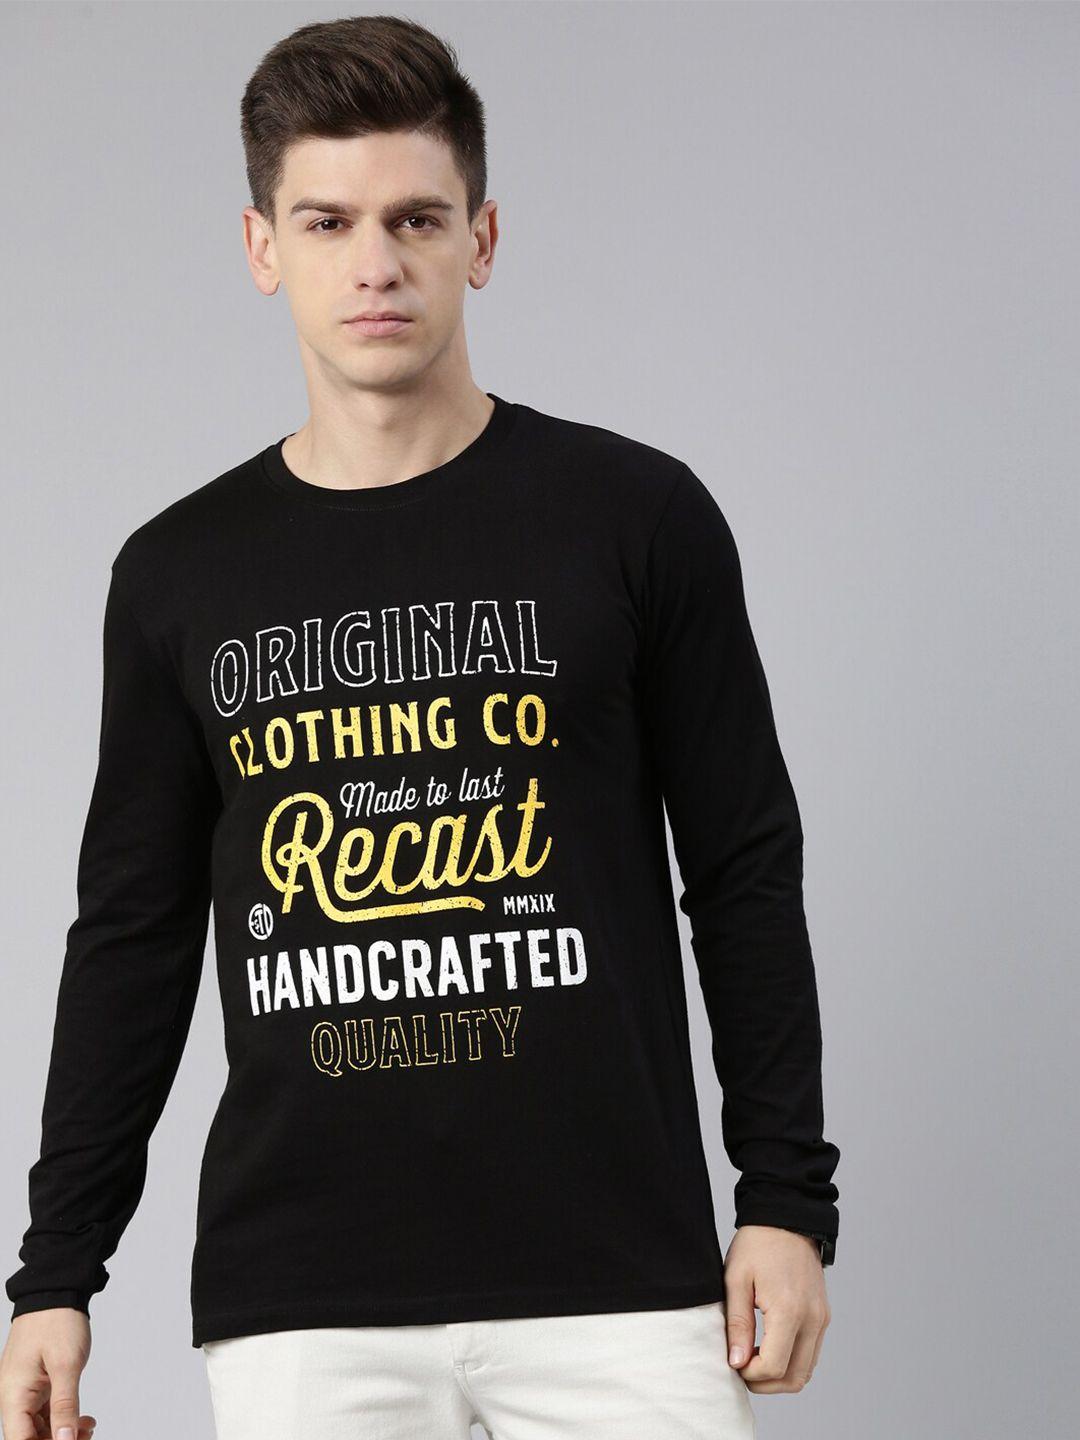 recast-men-black-typography-printed-cotton-t-shirt